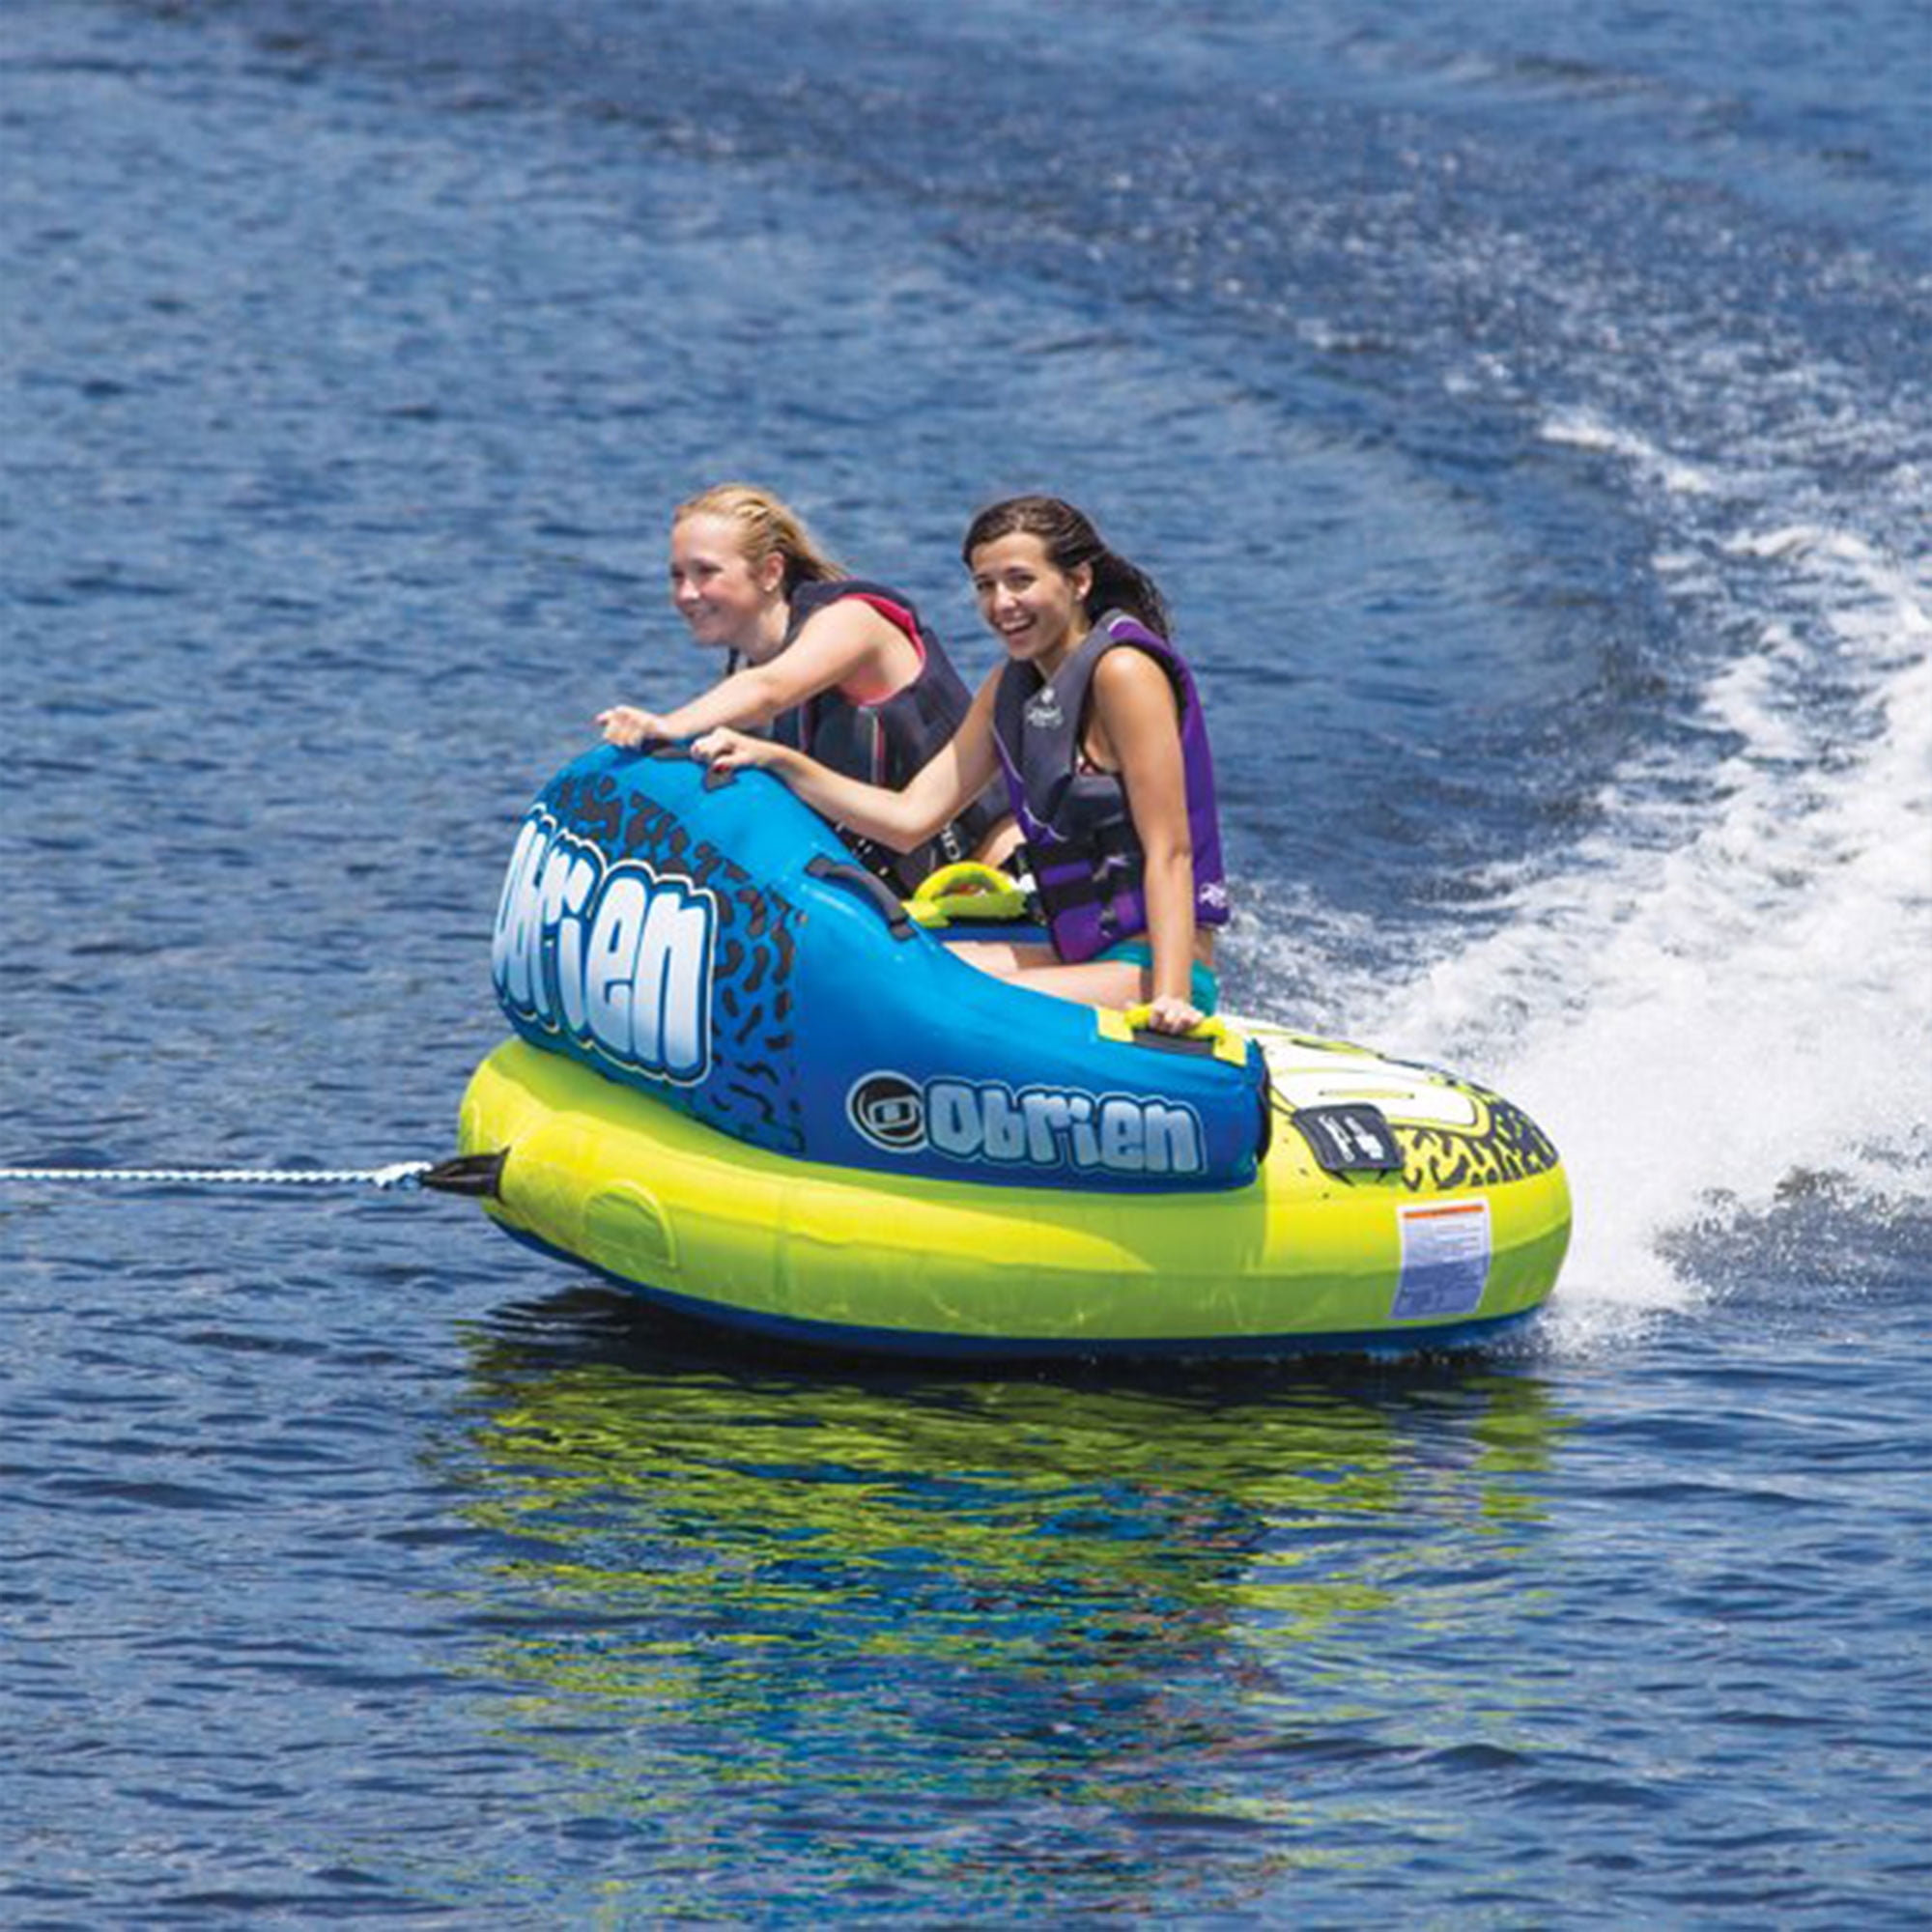 OBrien Barca 2 Kickback Inflatable 2 Person Rider Boat Water Tube Raft - 1